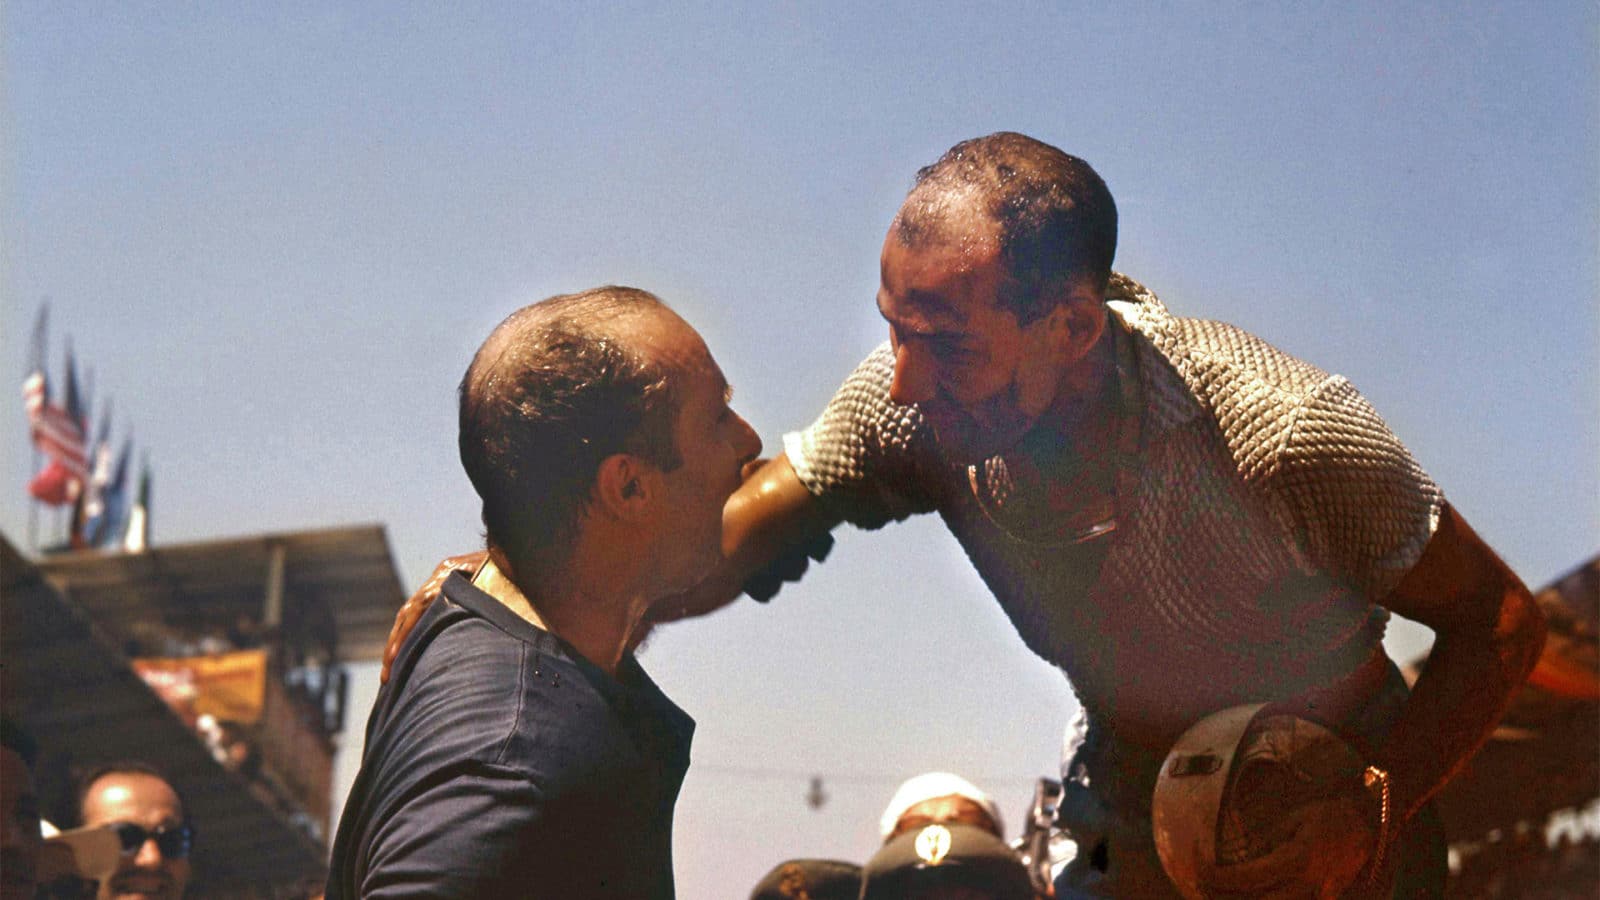 Stirling Moss Juan Manuel Fangio greet each other after a race